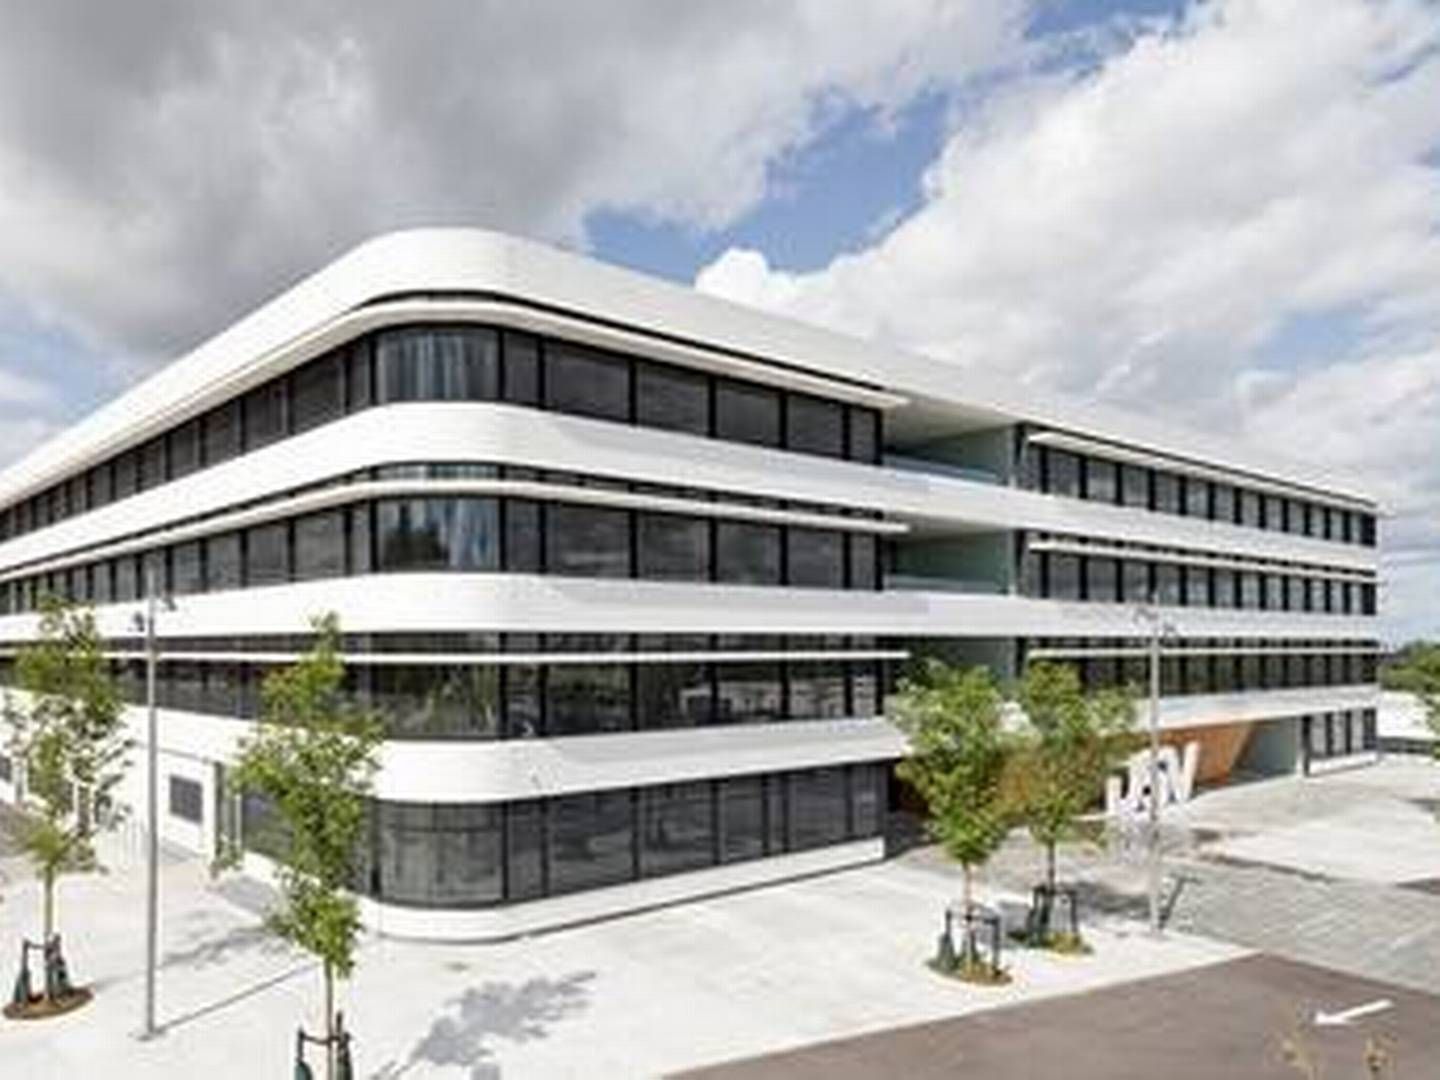 The DSV Panalpina headquarters in Hedehusene are part of a billion-kroner deal with a Korean investor. | Photo: PR/DSV